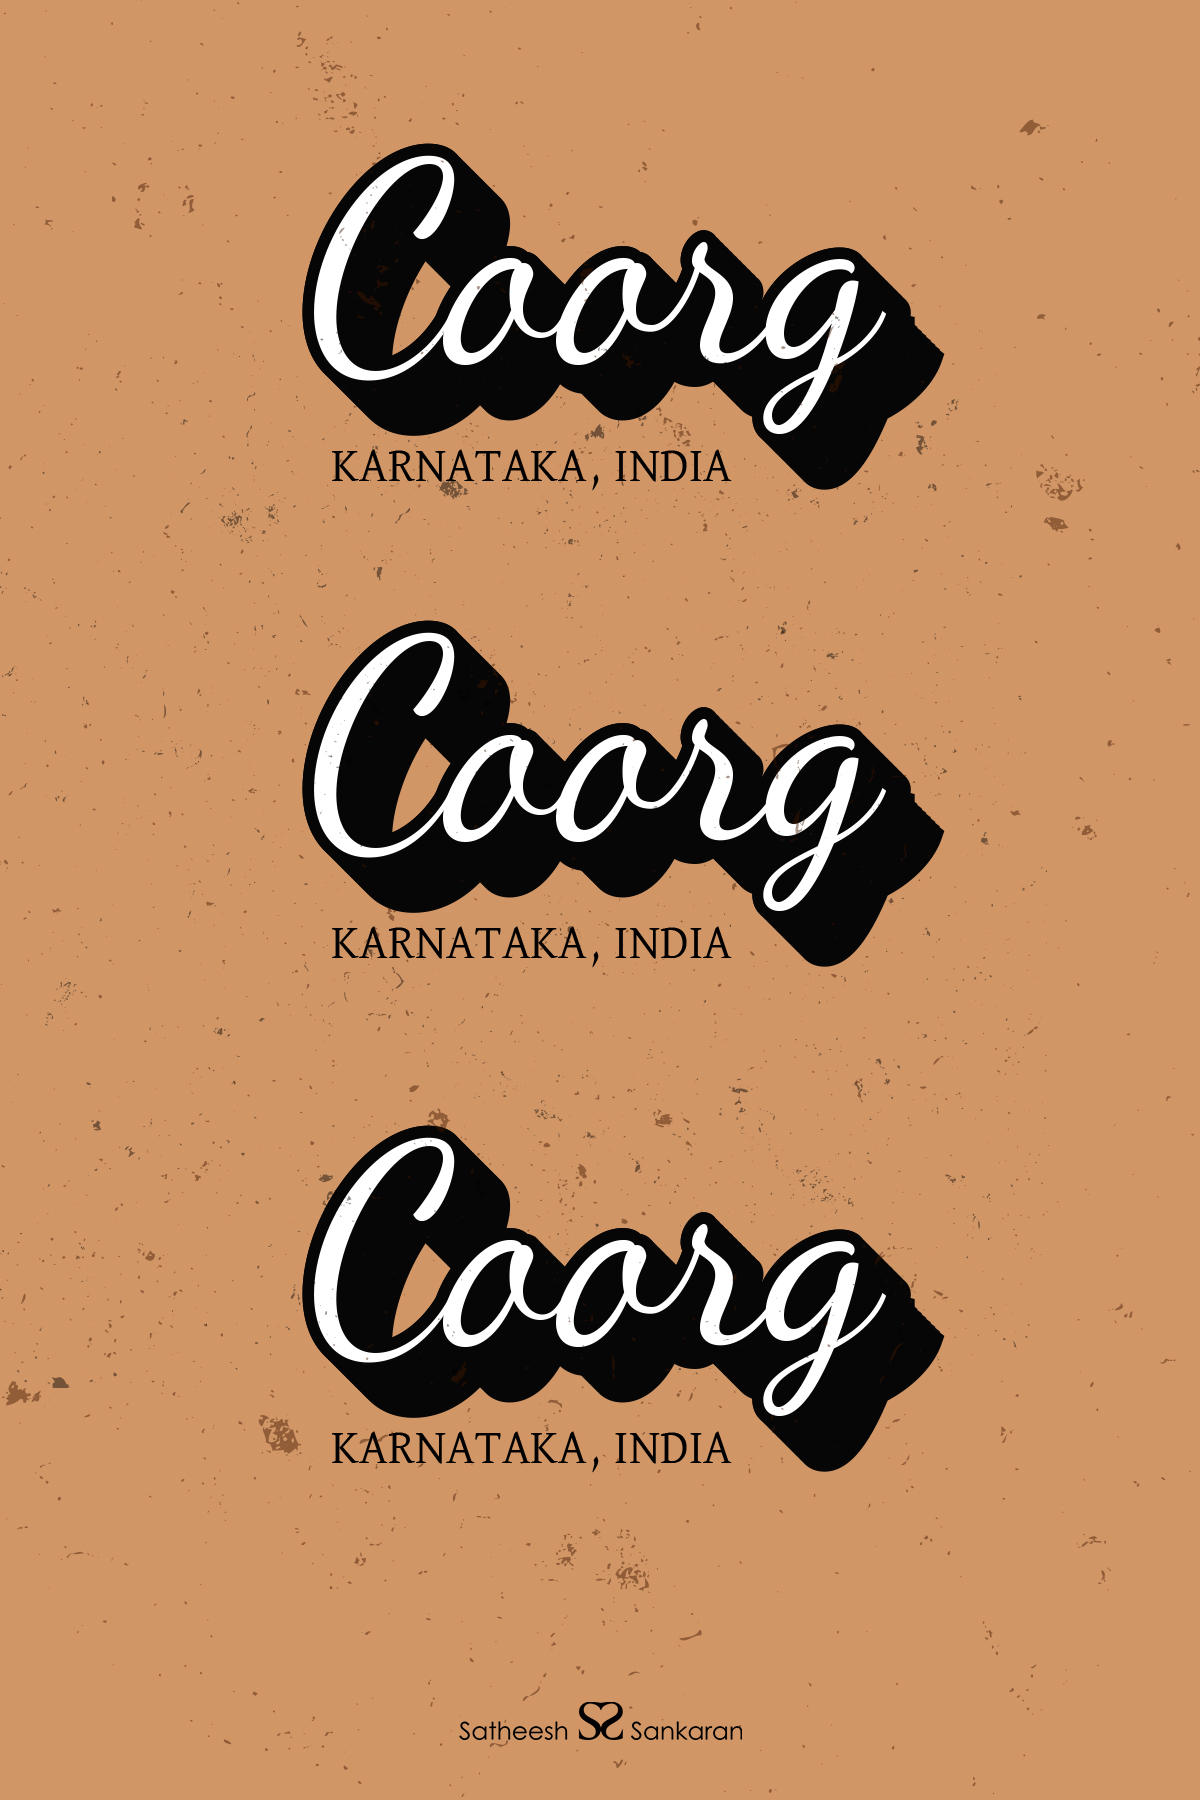 Coorg, Karnataka in India - Typography Poster Design